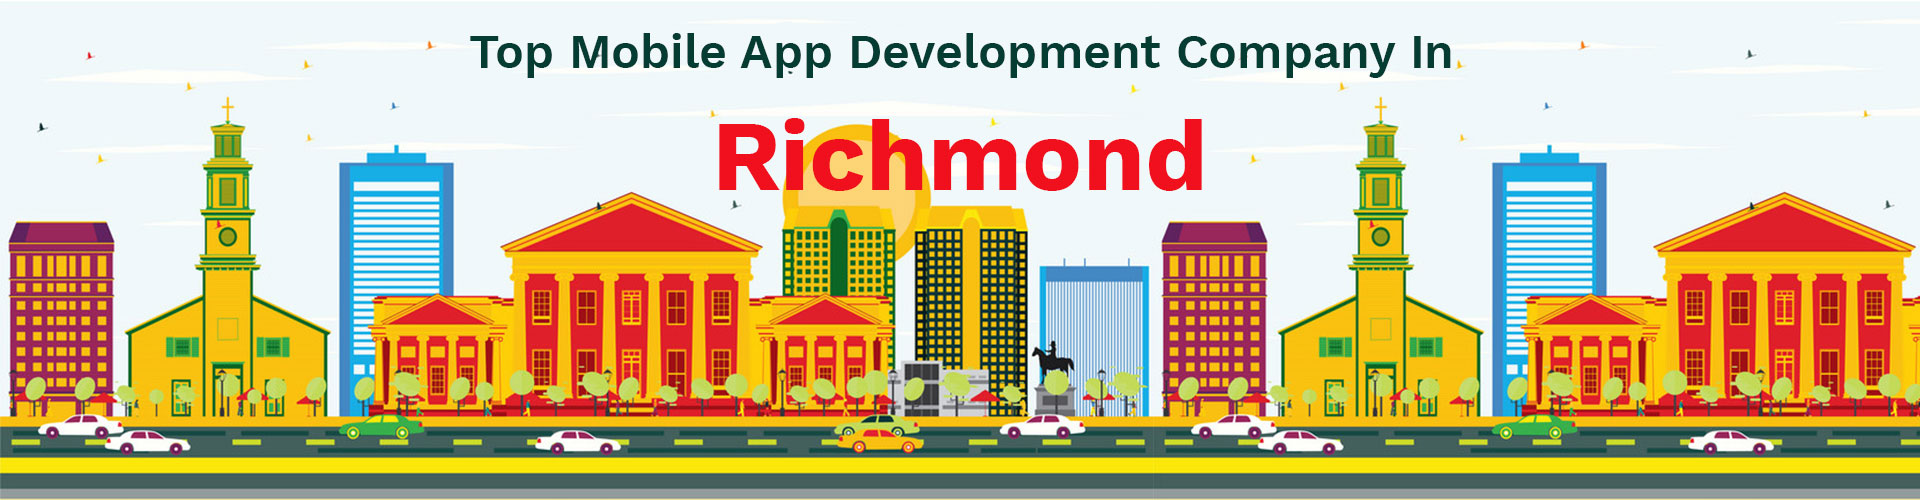 mobile app development company richmond